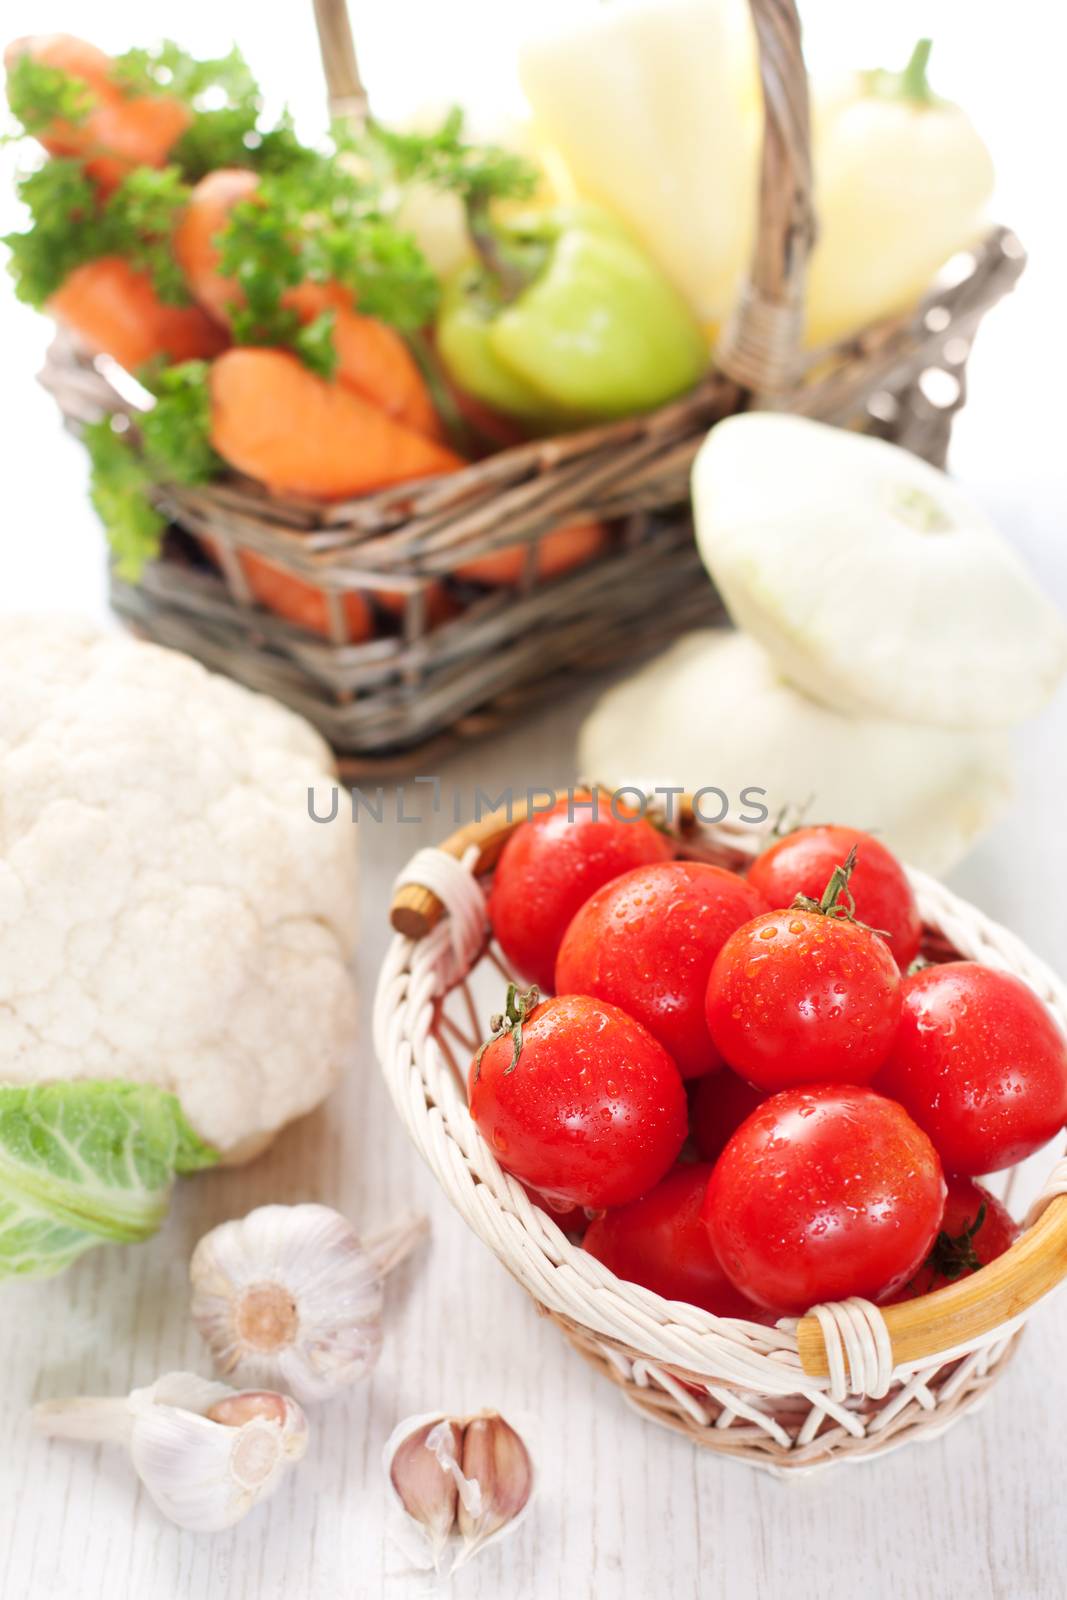 Healthy vegetables in the basket 